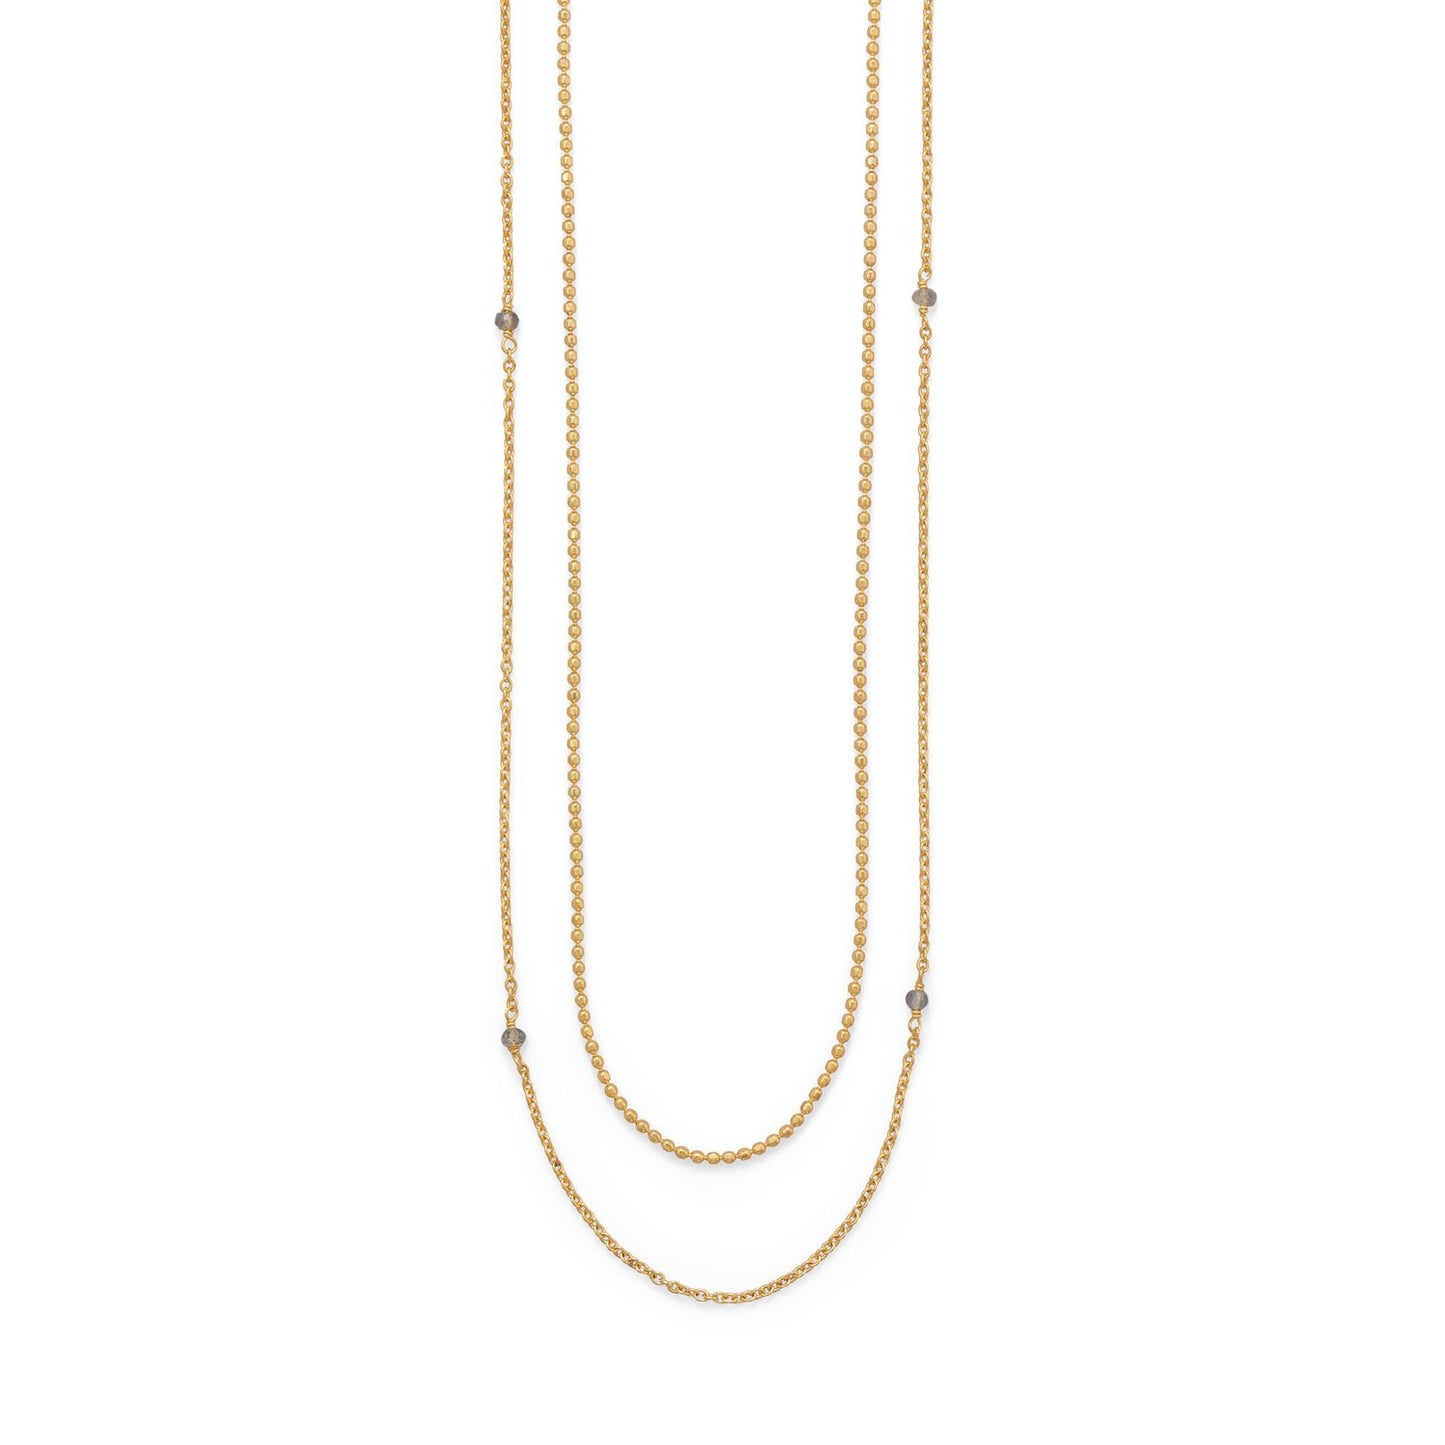 36" 14 Karat Gold Plated Two Strand Labradorite Necklace